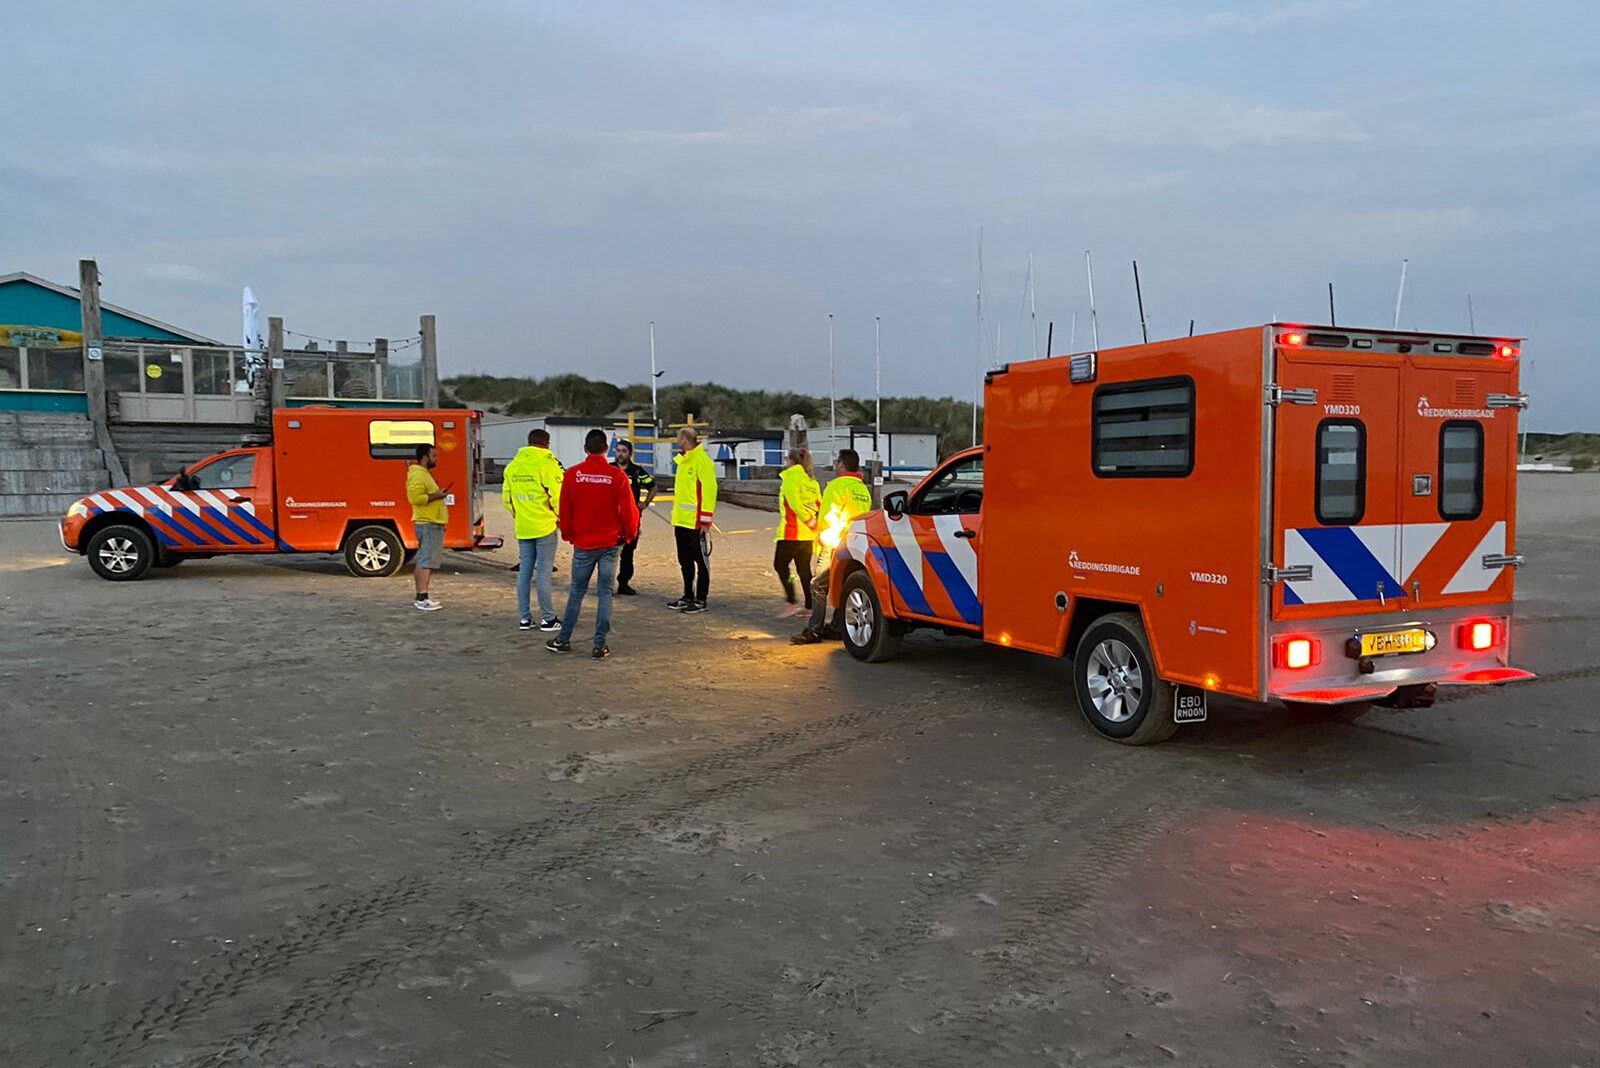 Reddingsbrigade vermissing Strand IJmuiden - voertuigen tijdens alarmering